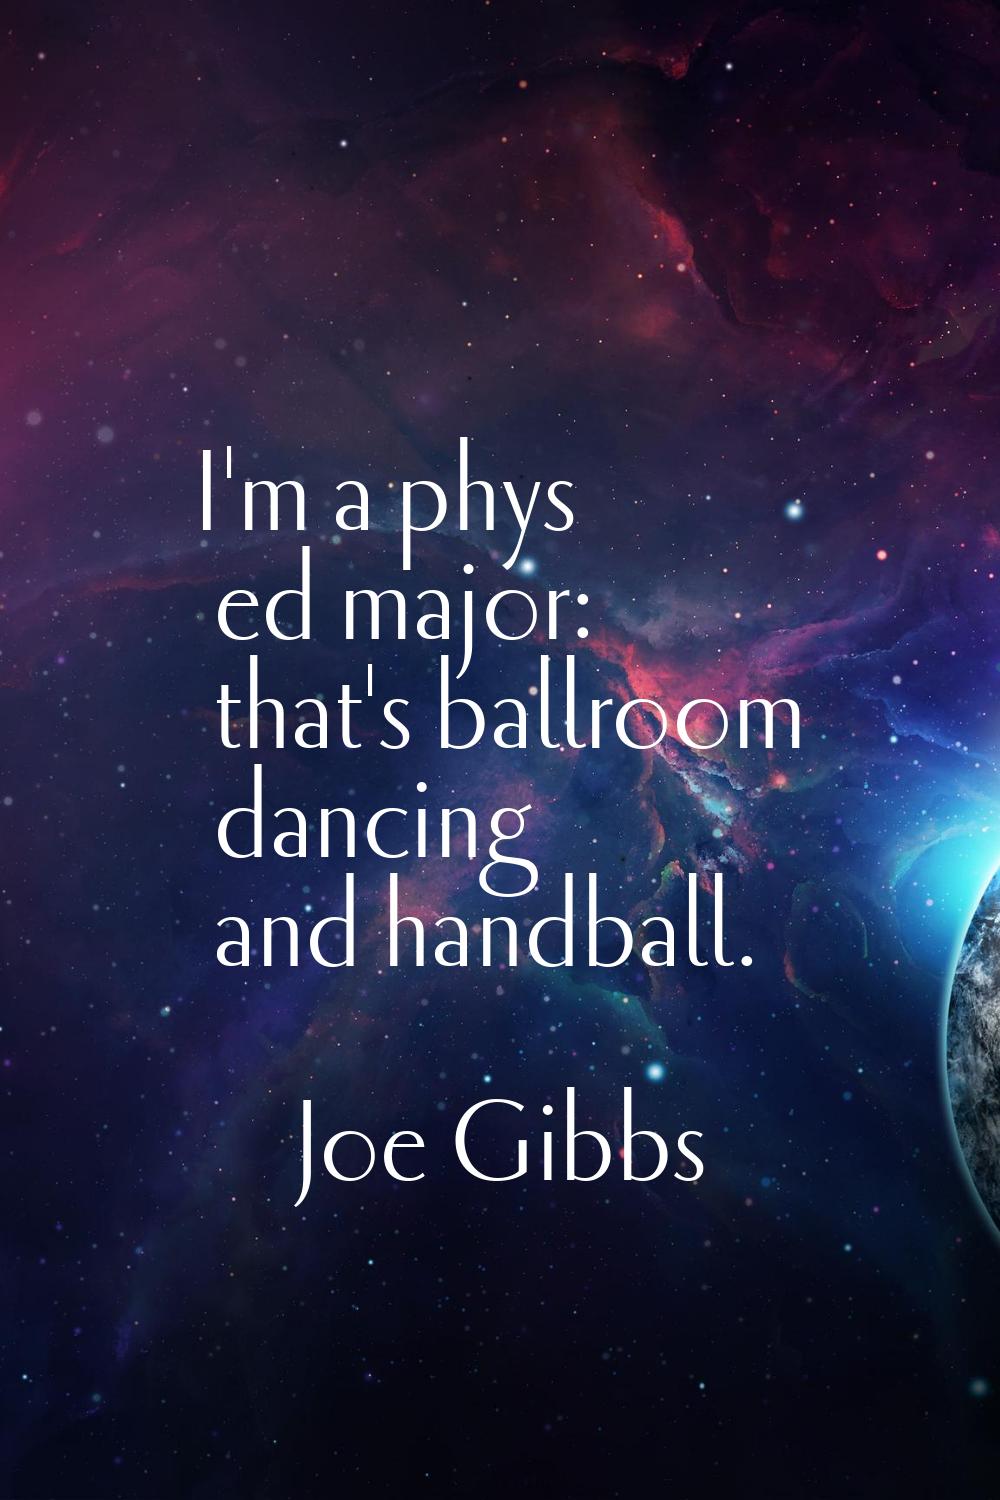 I'm a phys ed major: that's ballroom dancing and handball.